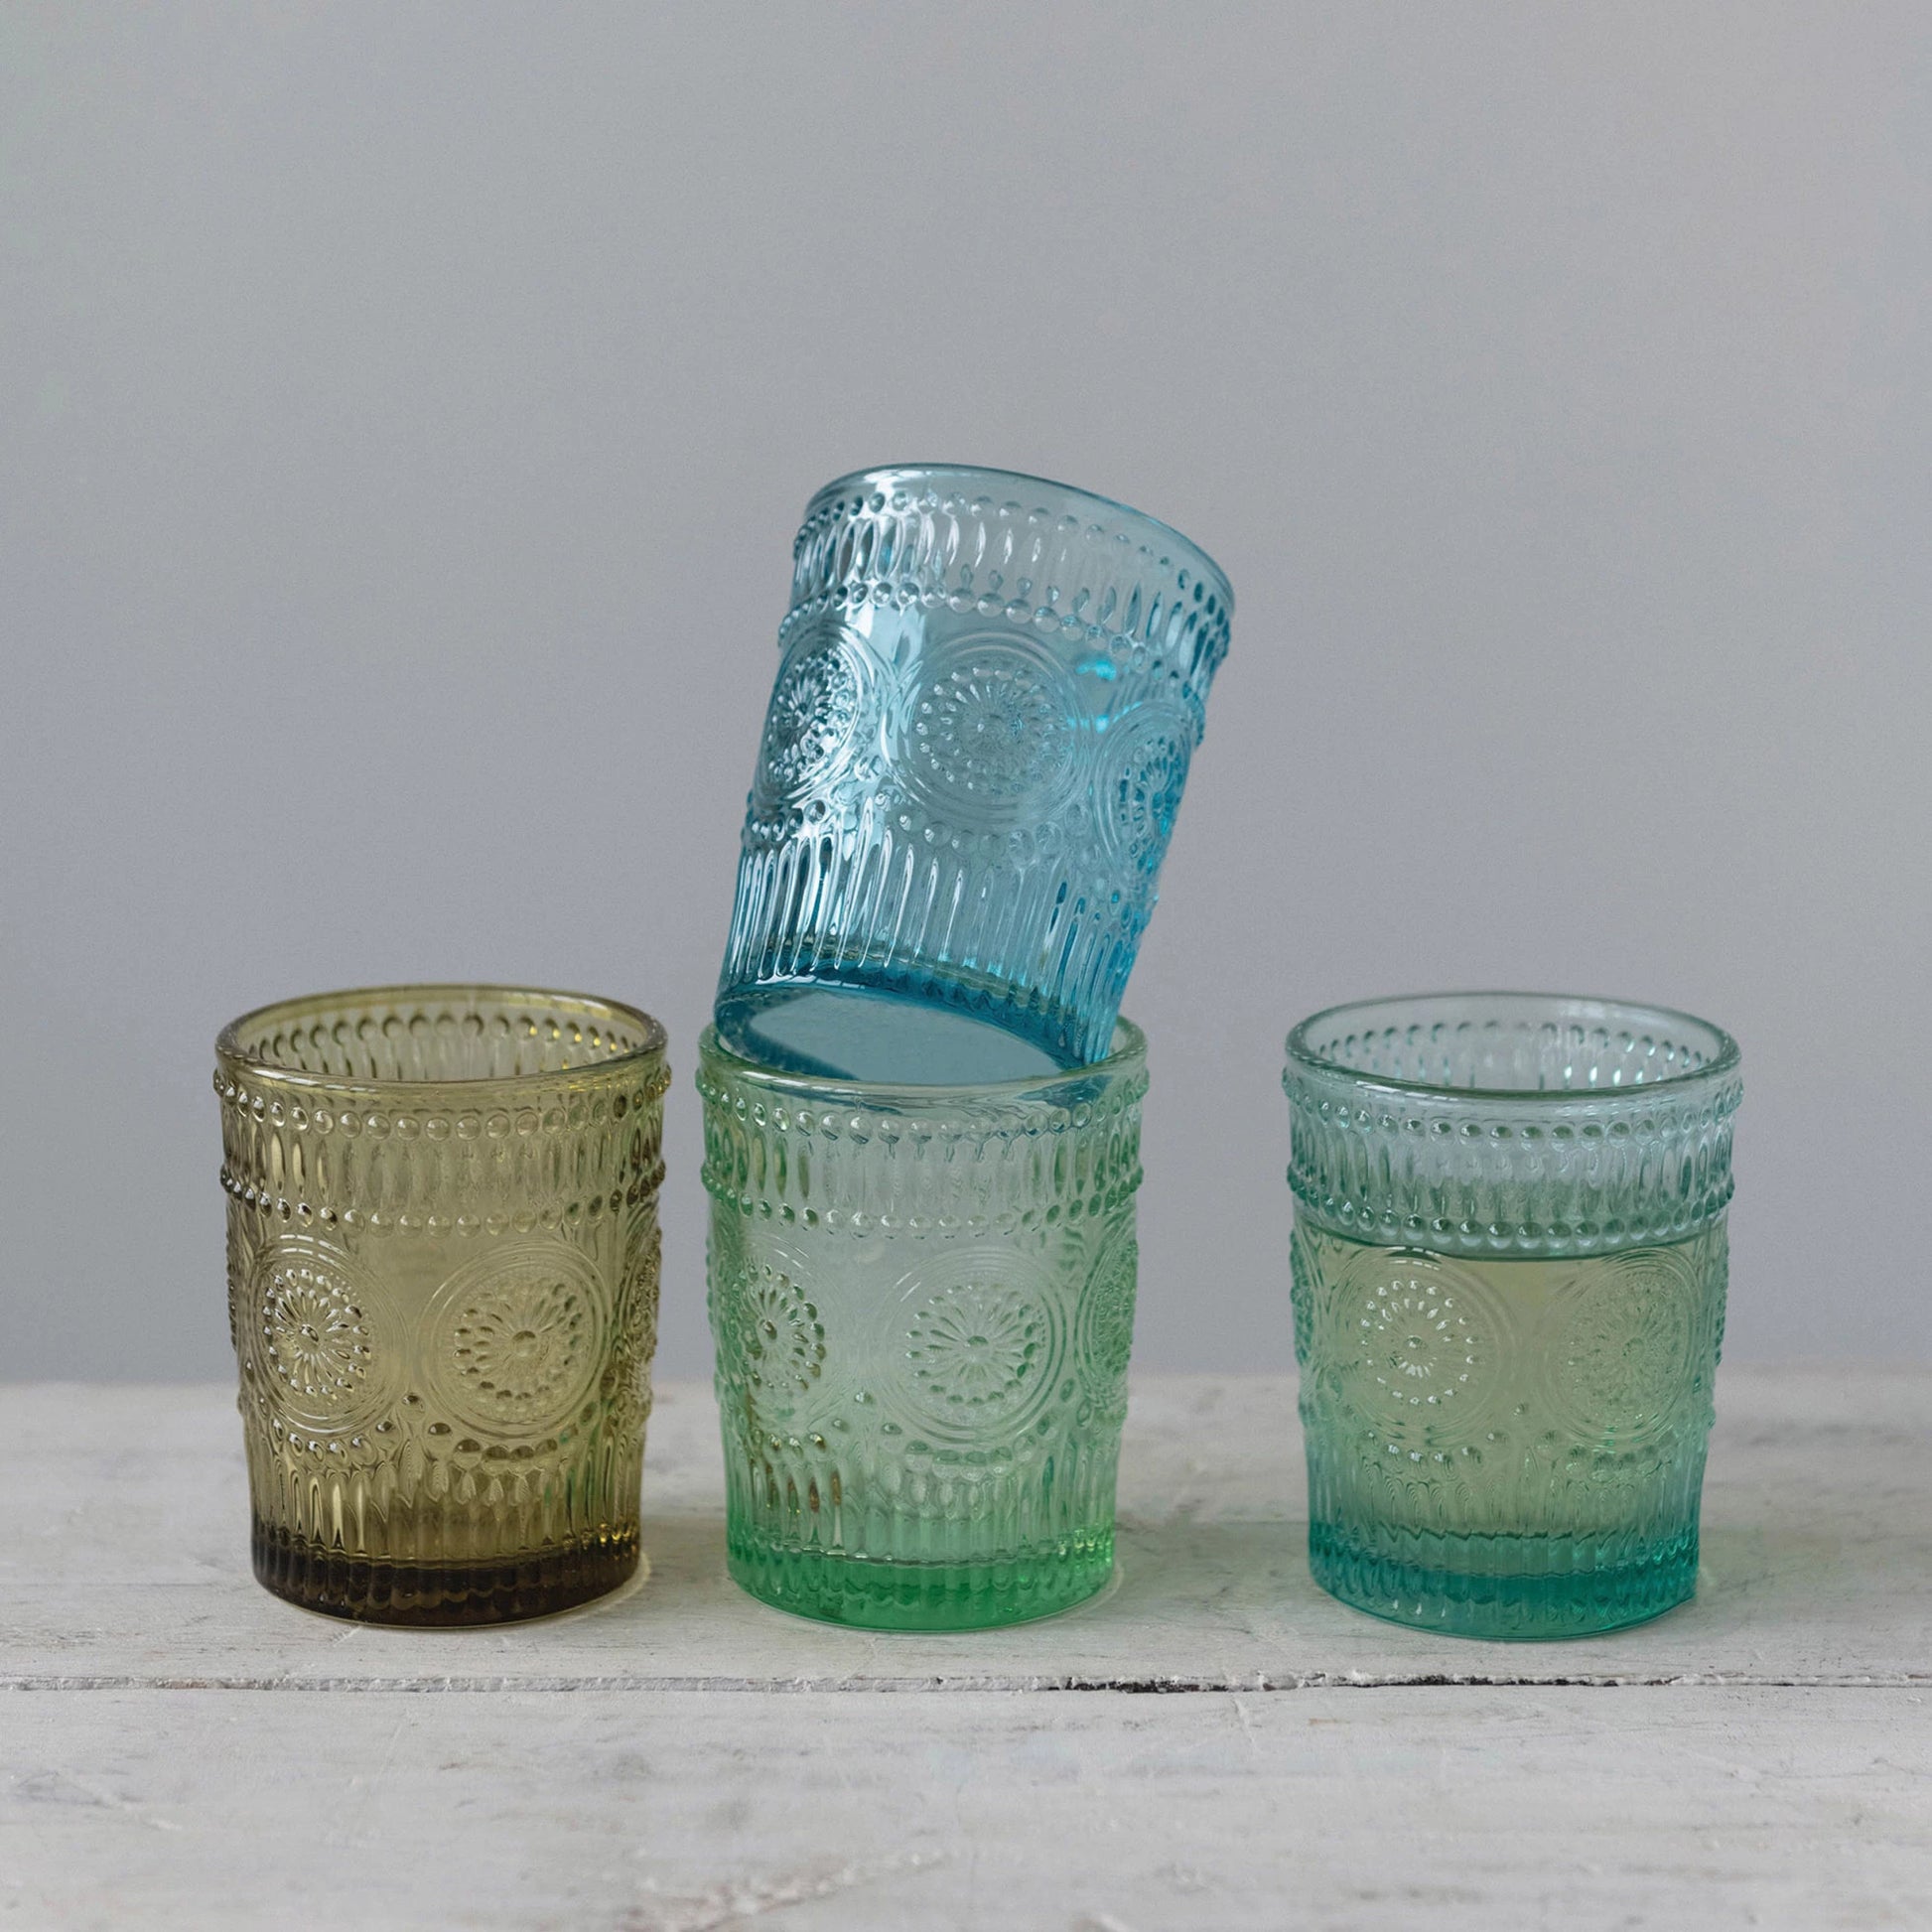 12 oz Vintage Drinking Glasses Embossed Romantic Water Glassware